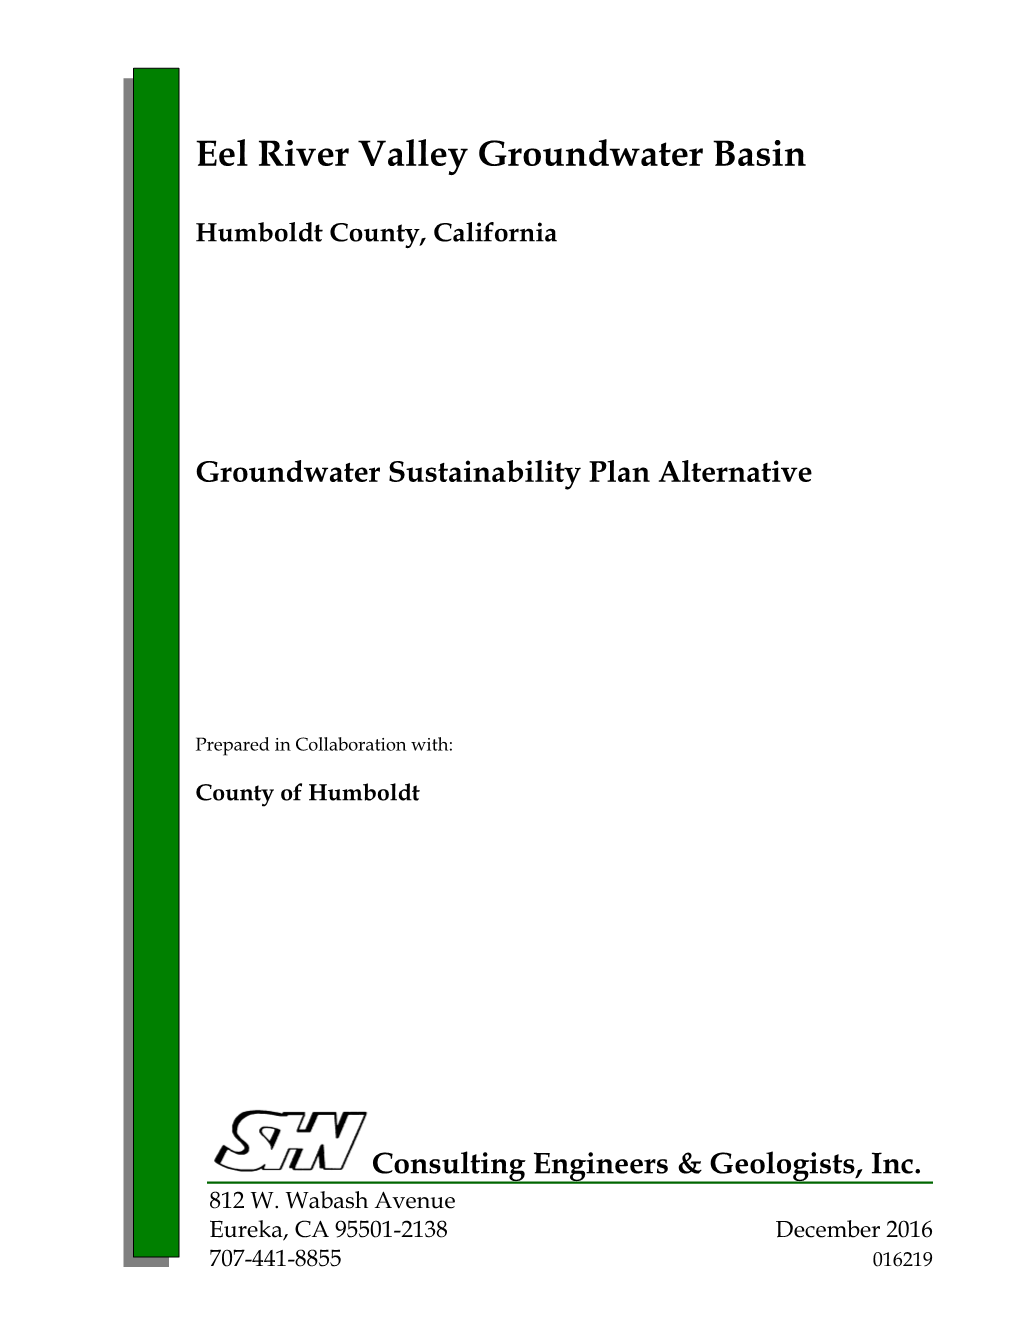 Groundwater Sustainability Plan Alternative